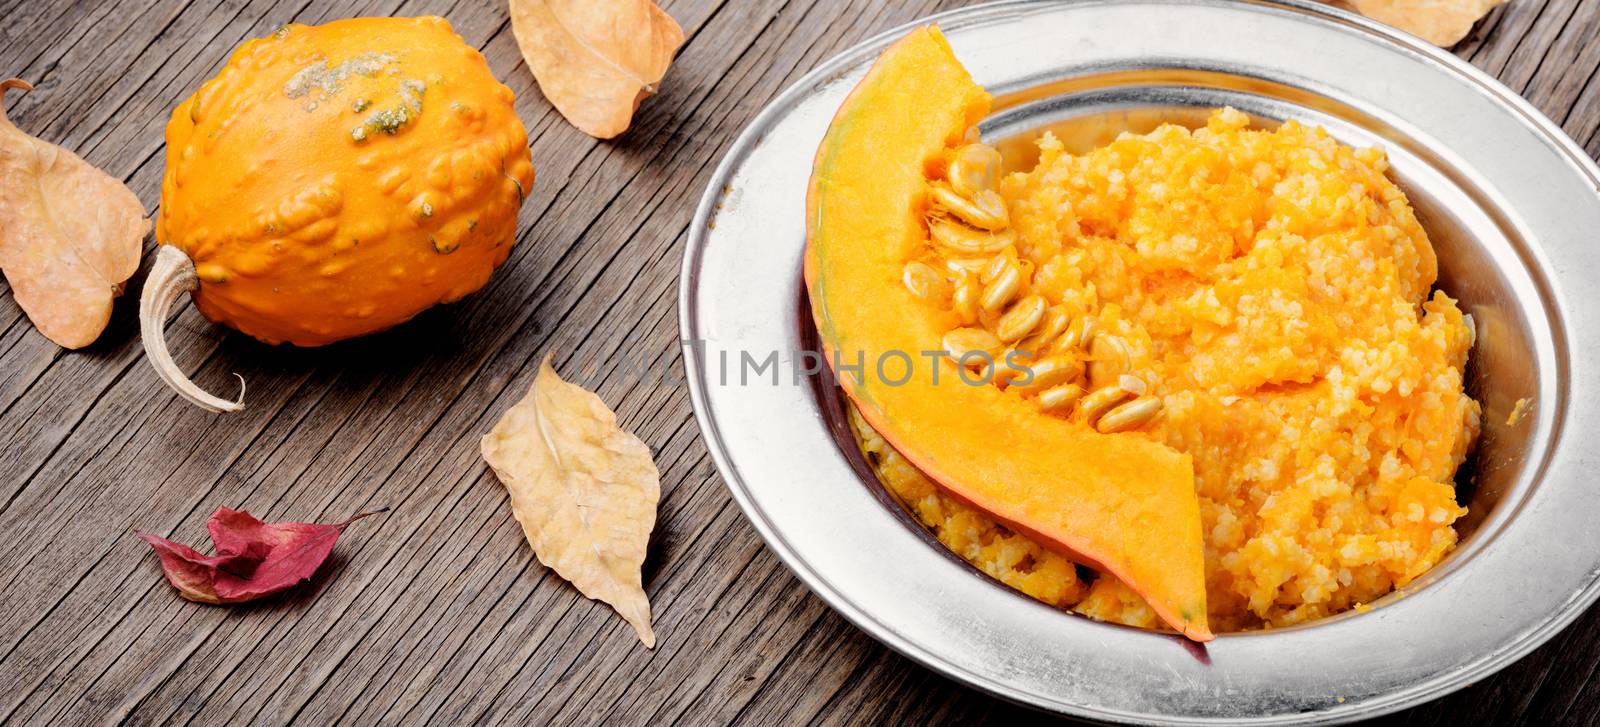 Pumpkin porridge and pumpkins by LMykola